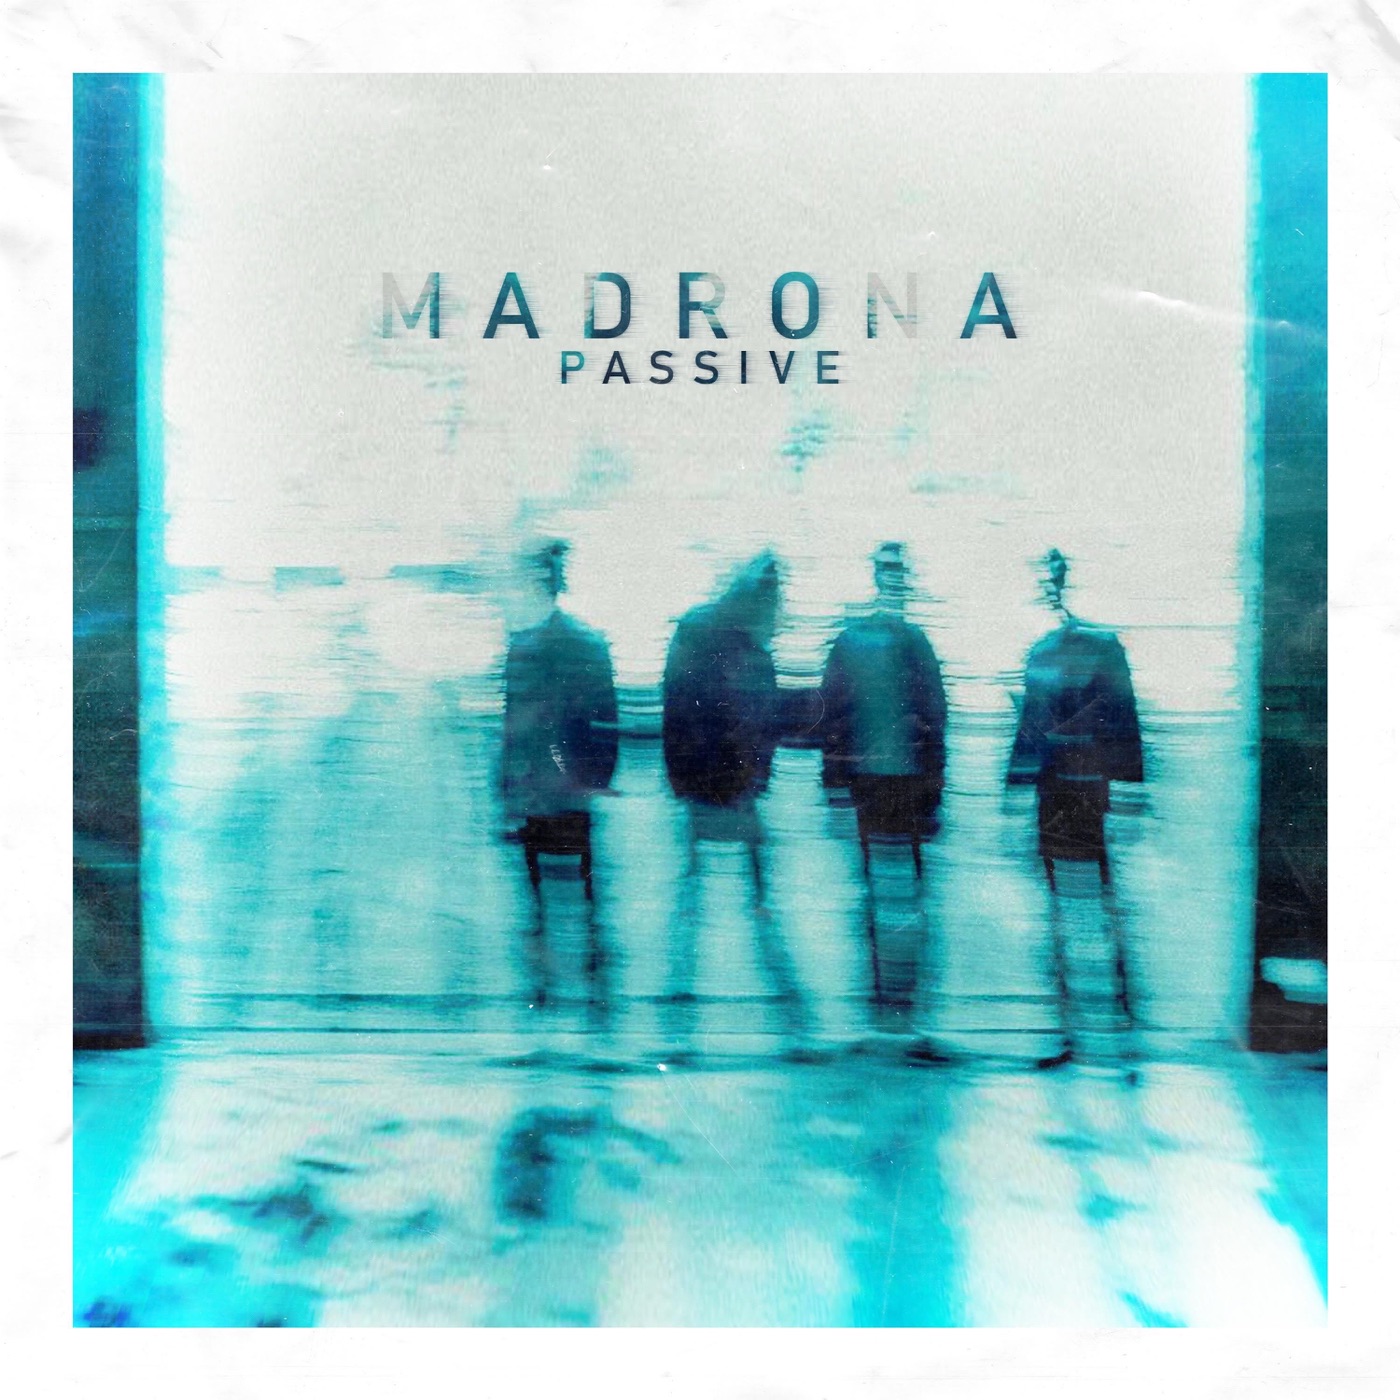 Madrona - Passive [EP] (2019)